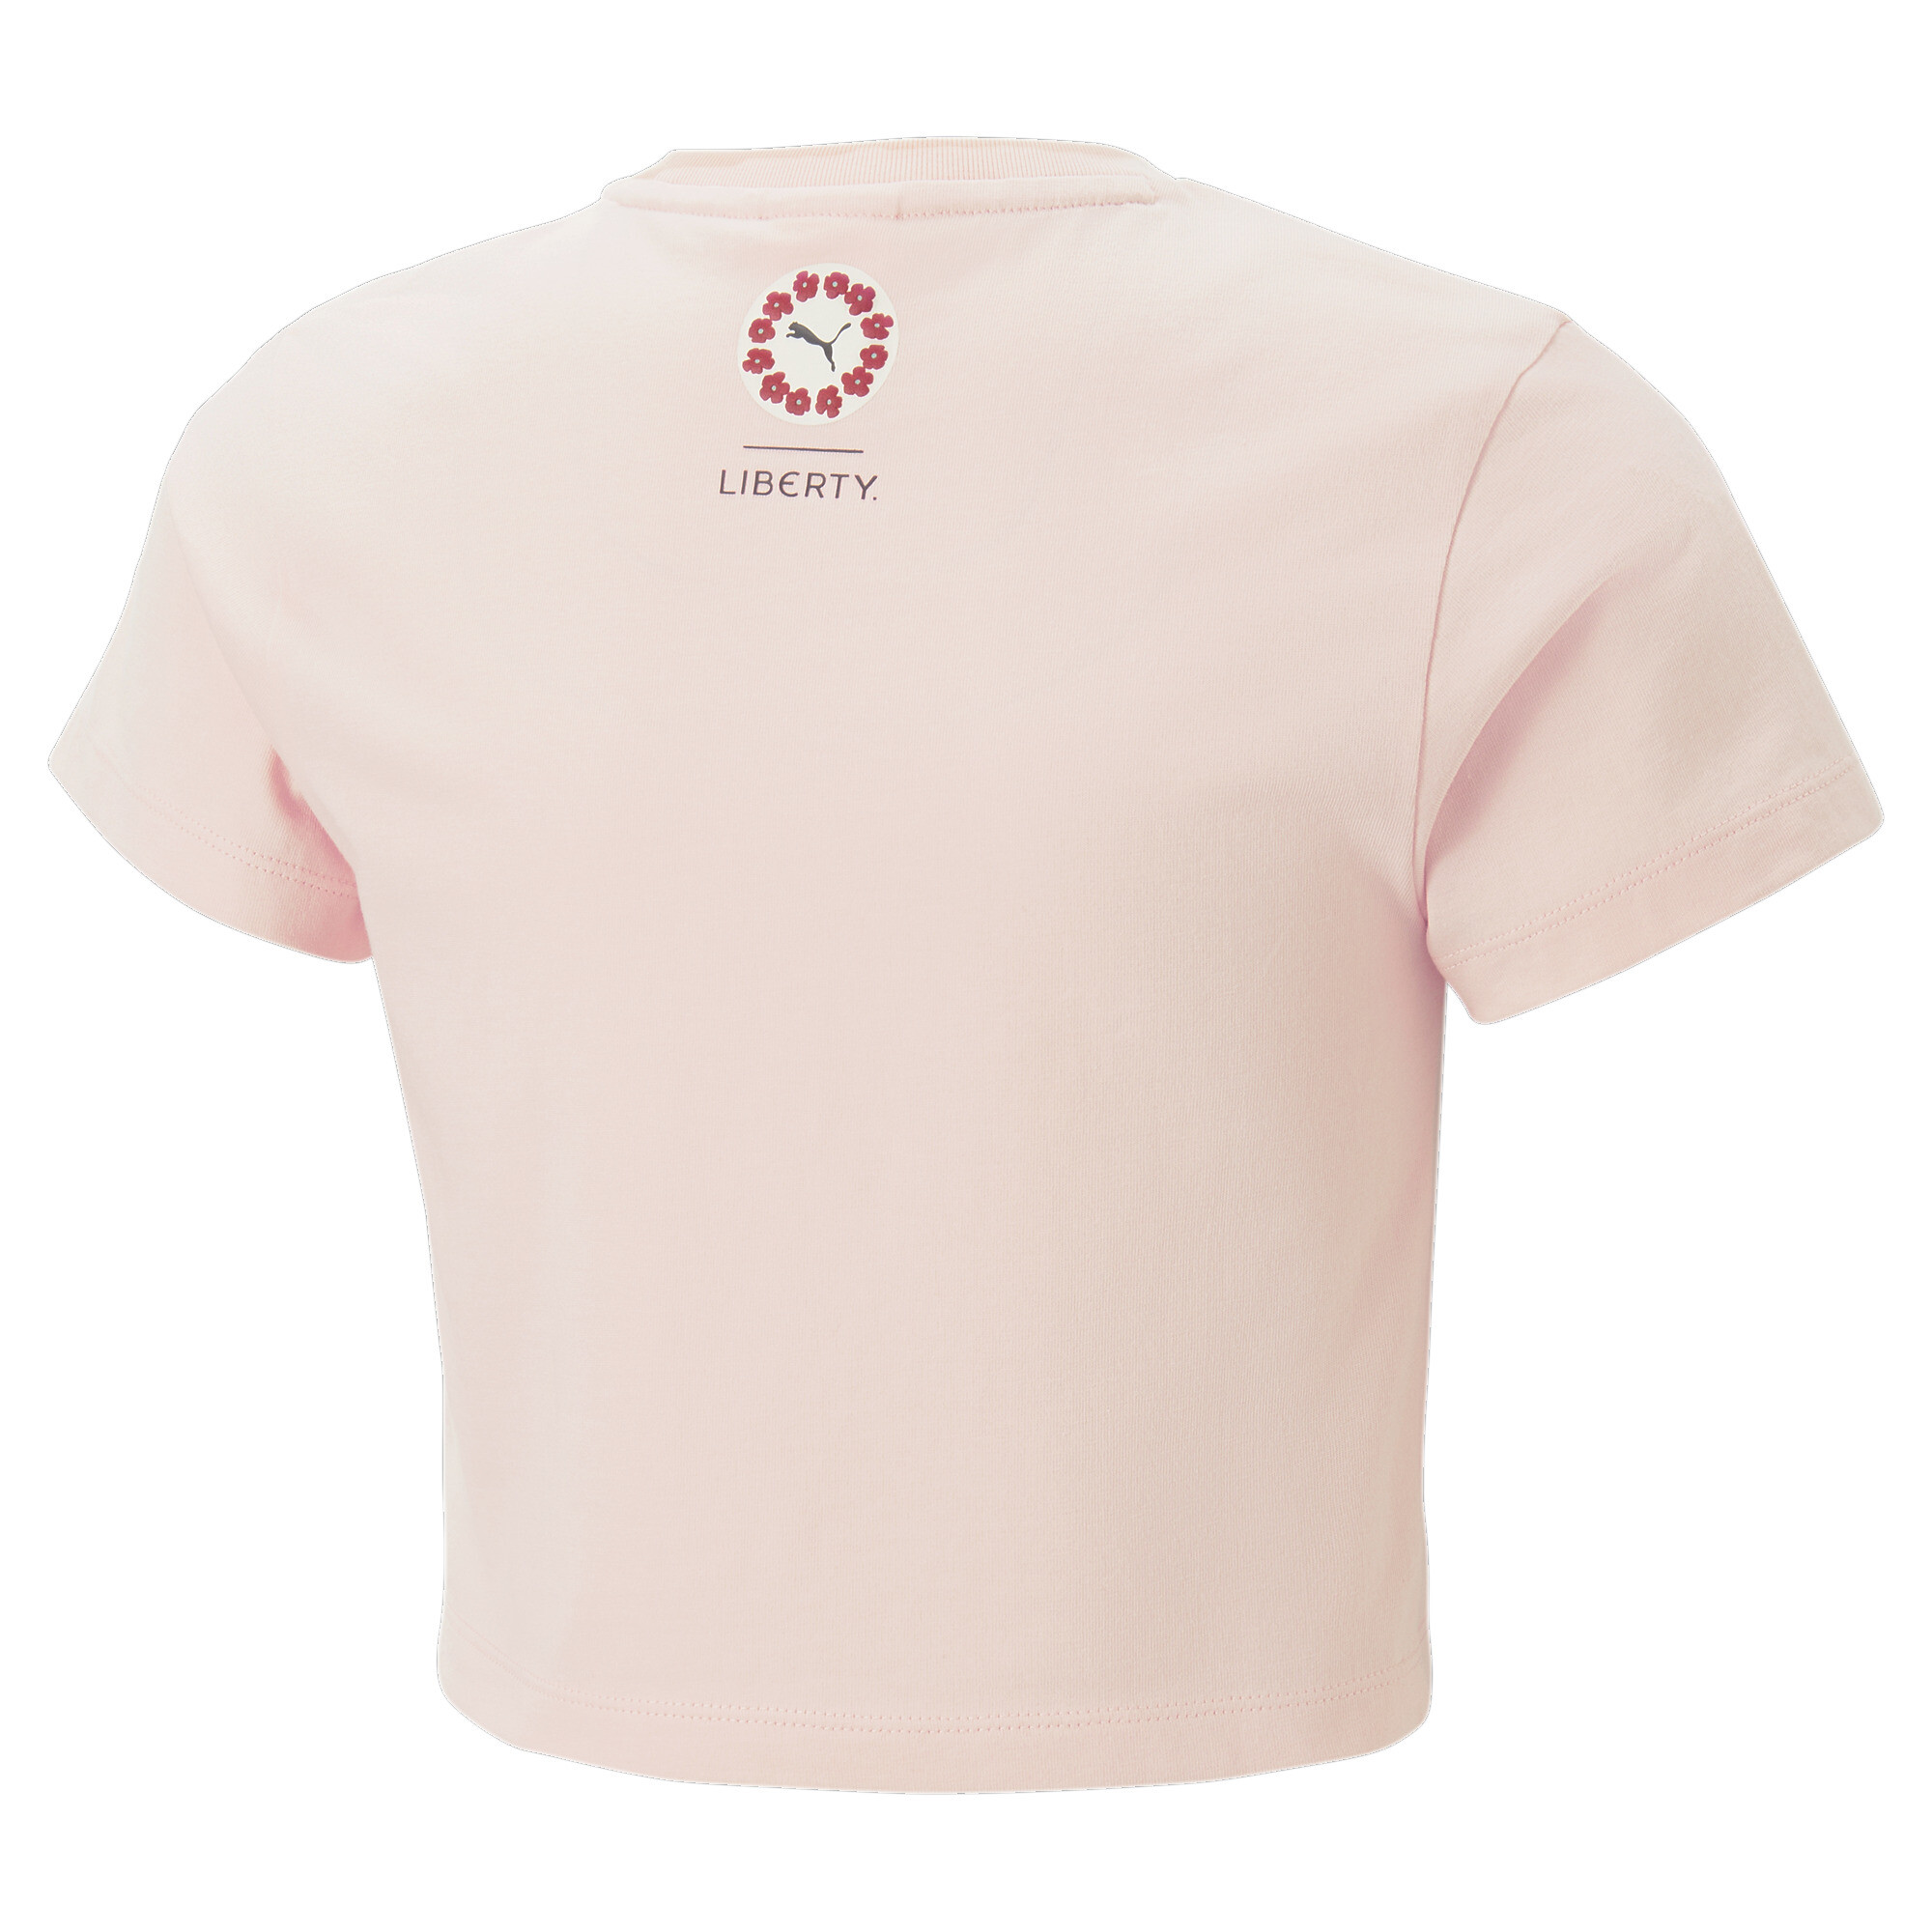 PUMA X LIBERTY T-Shirt Kids In Pink, Size 7-8 Youth